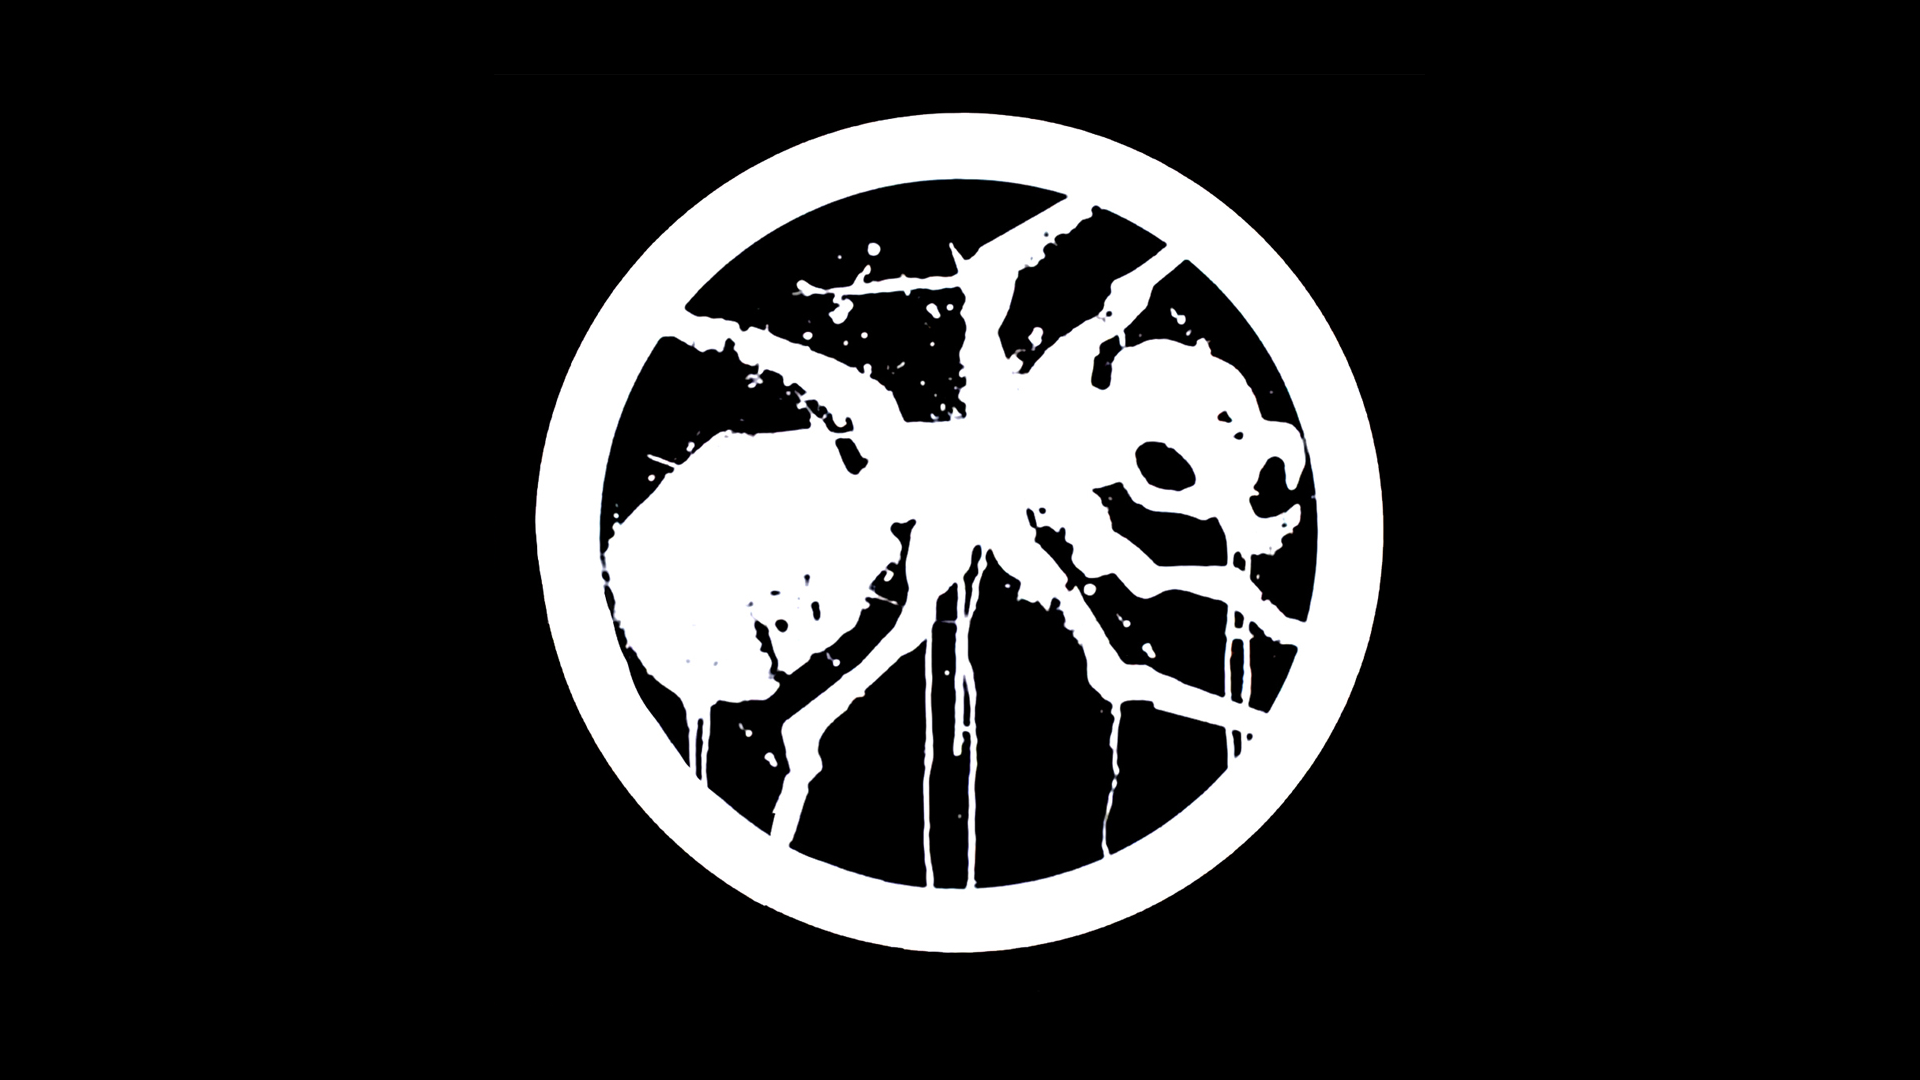 General 1920x1080 The Prodigy ants circle logo minimalism black background music animals insect